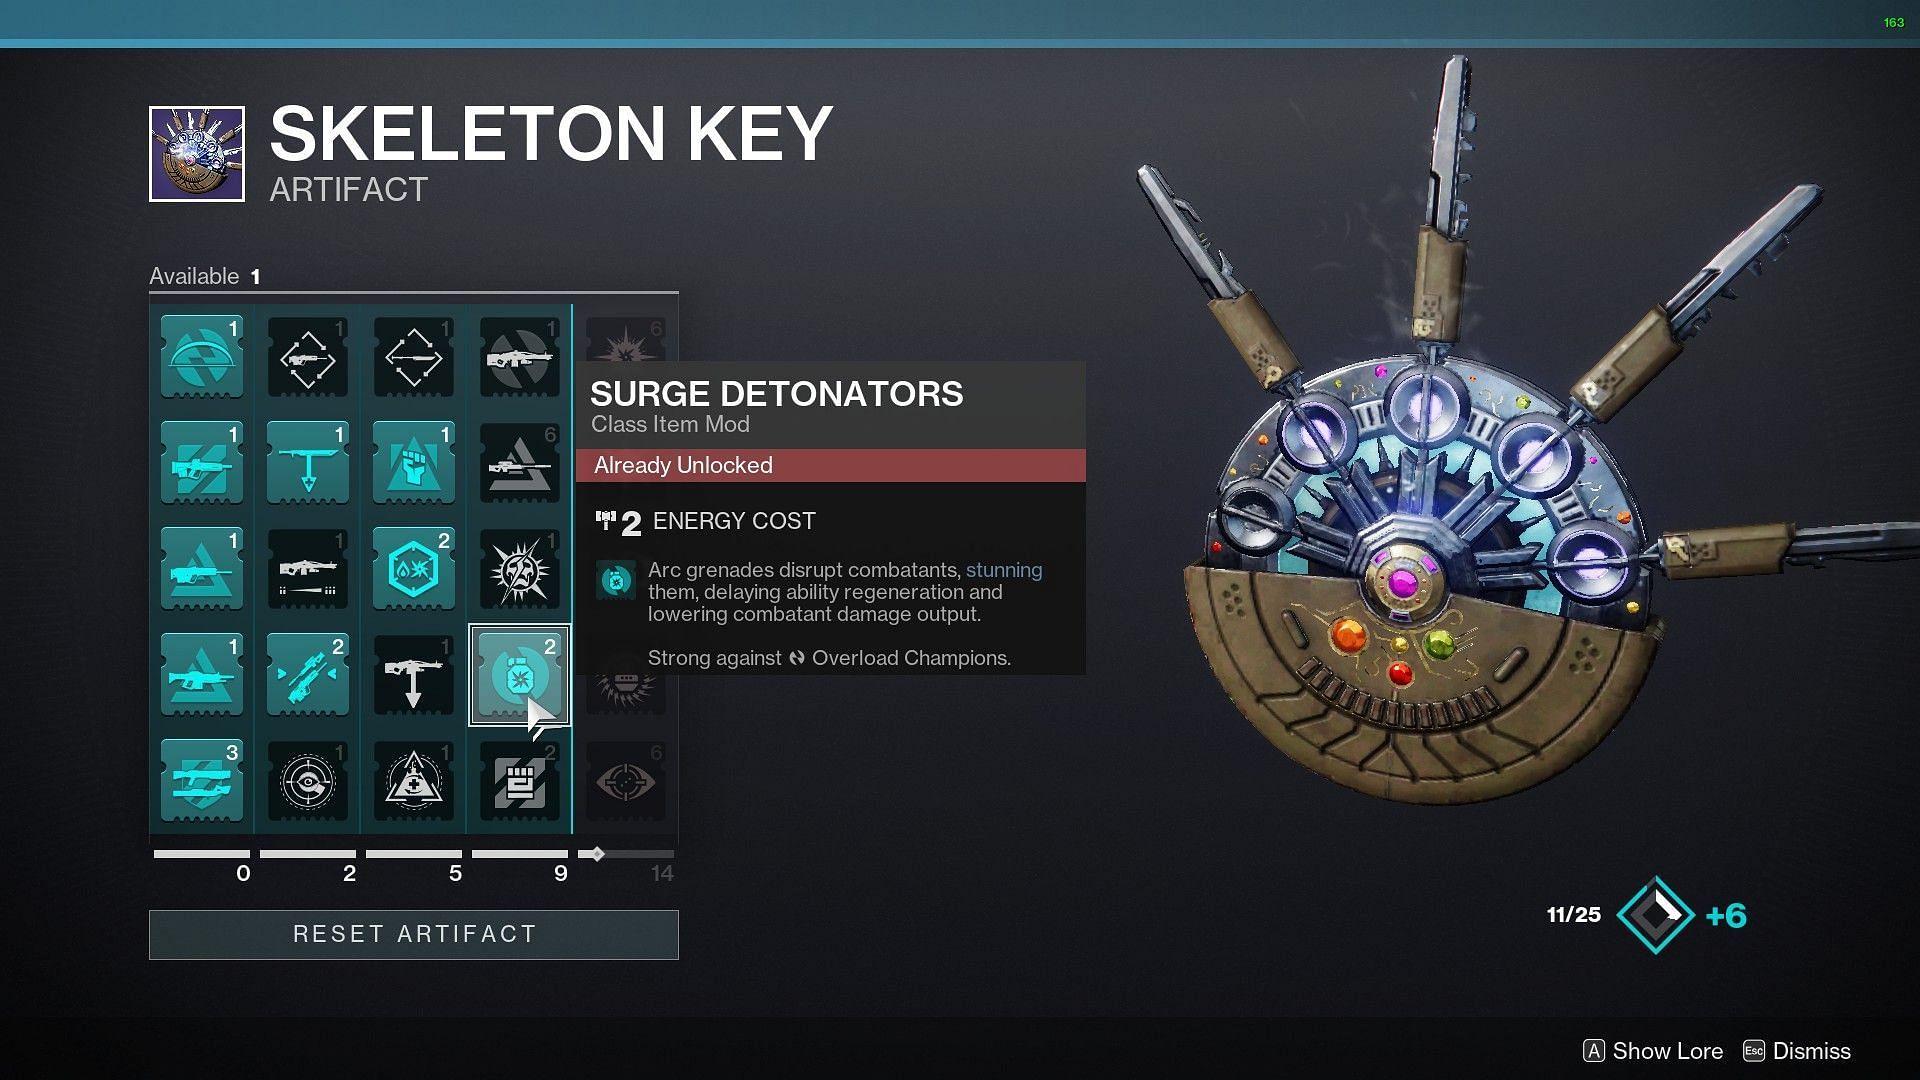 Surge Detonators mod from artifact (Image via Bungie)